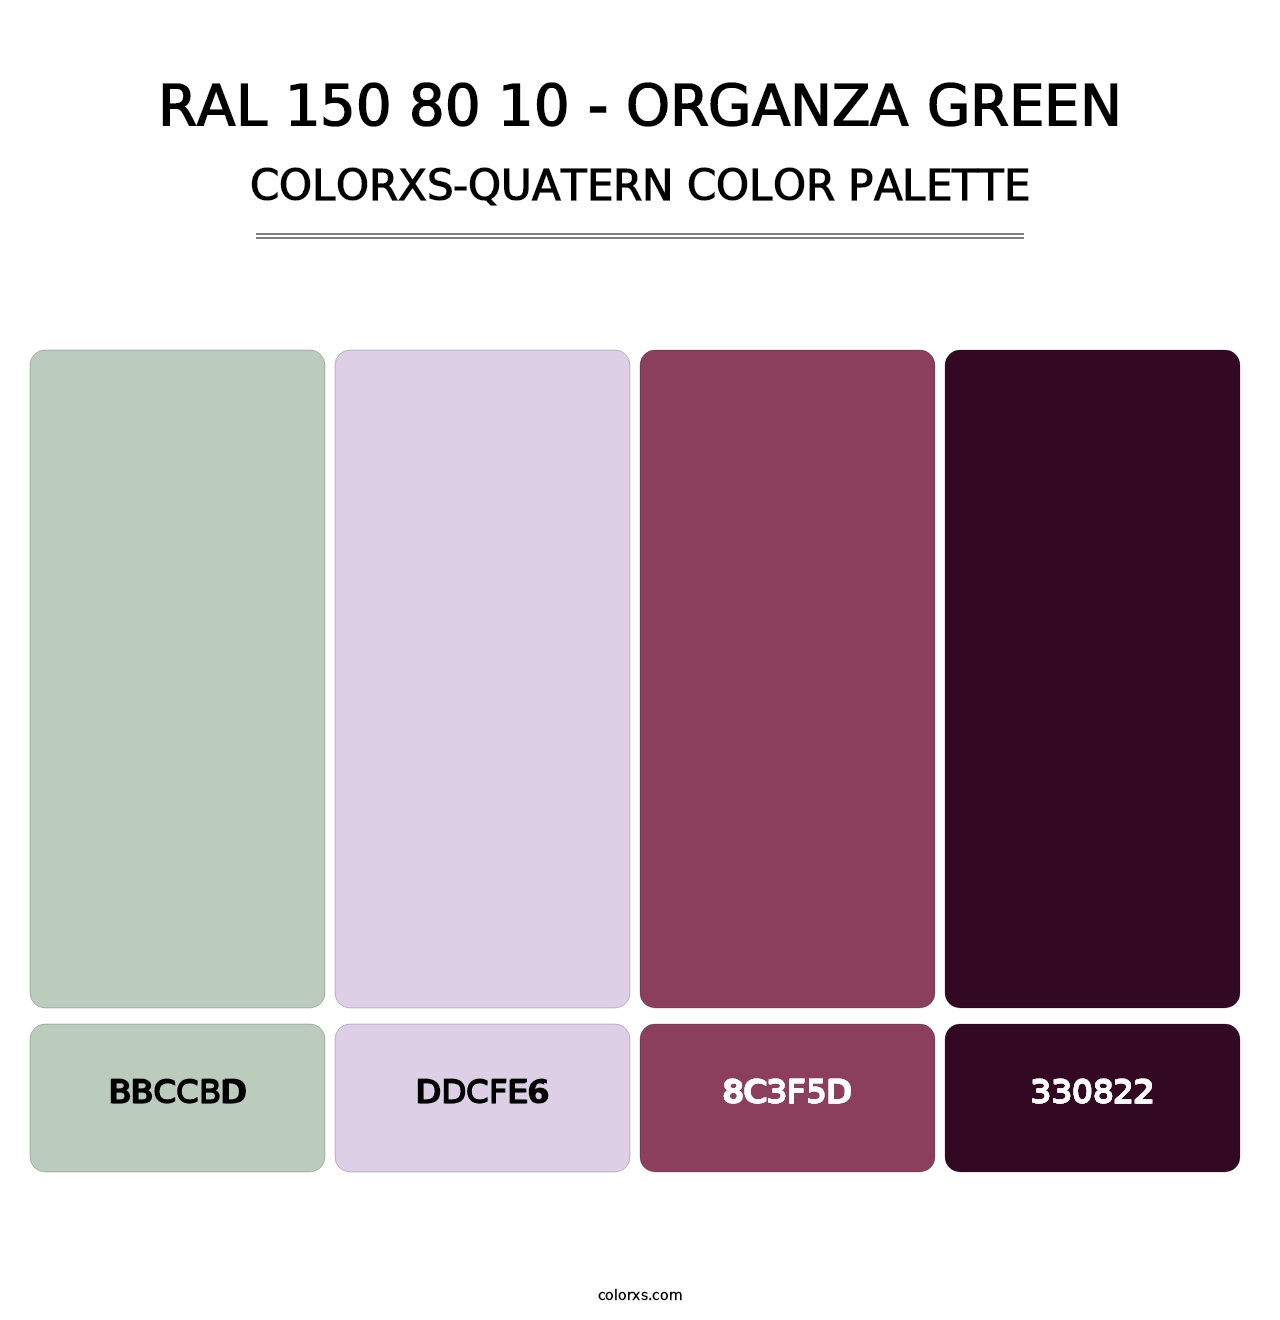 RAL 150 80 10 - Organza Green - Colorxs Quatern Palette